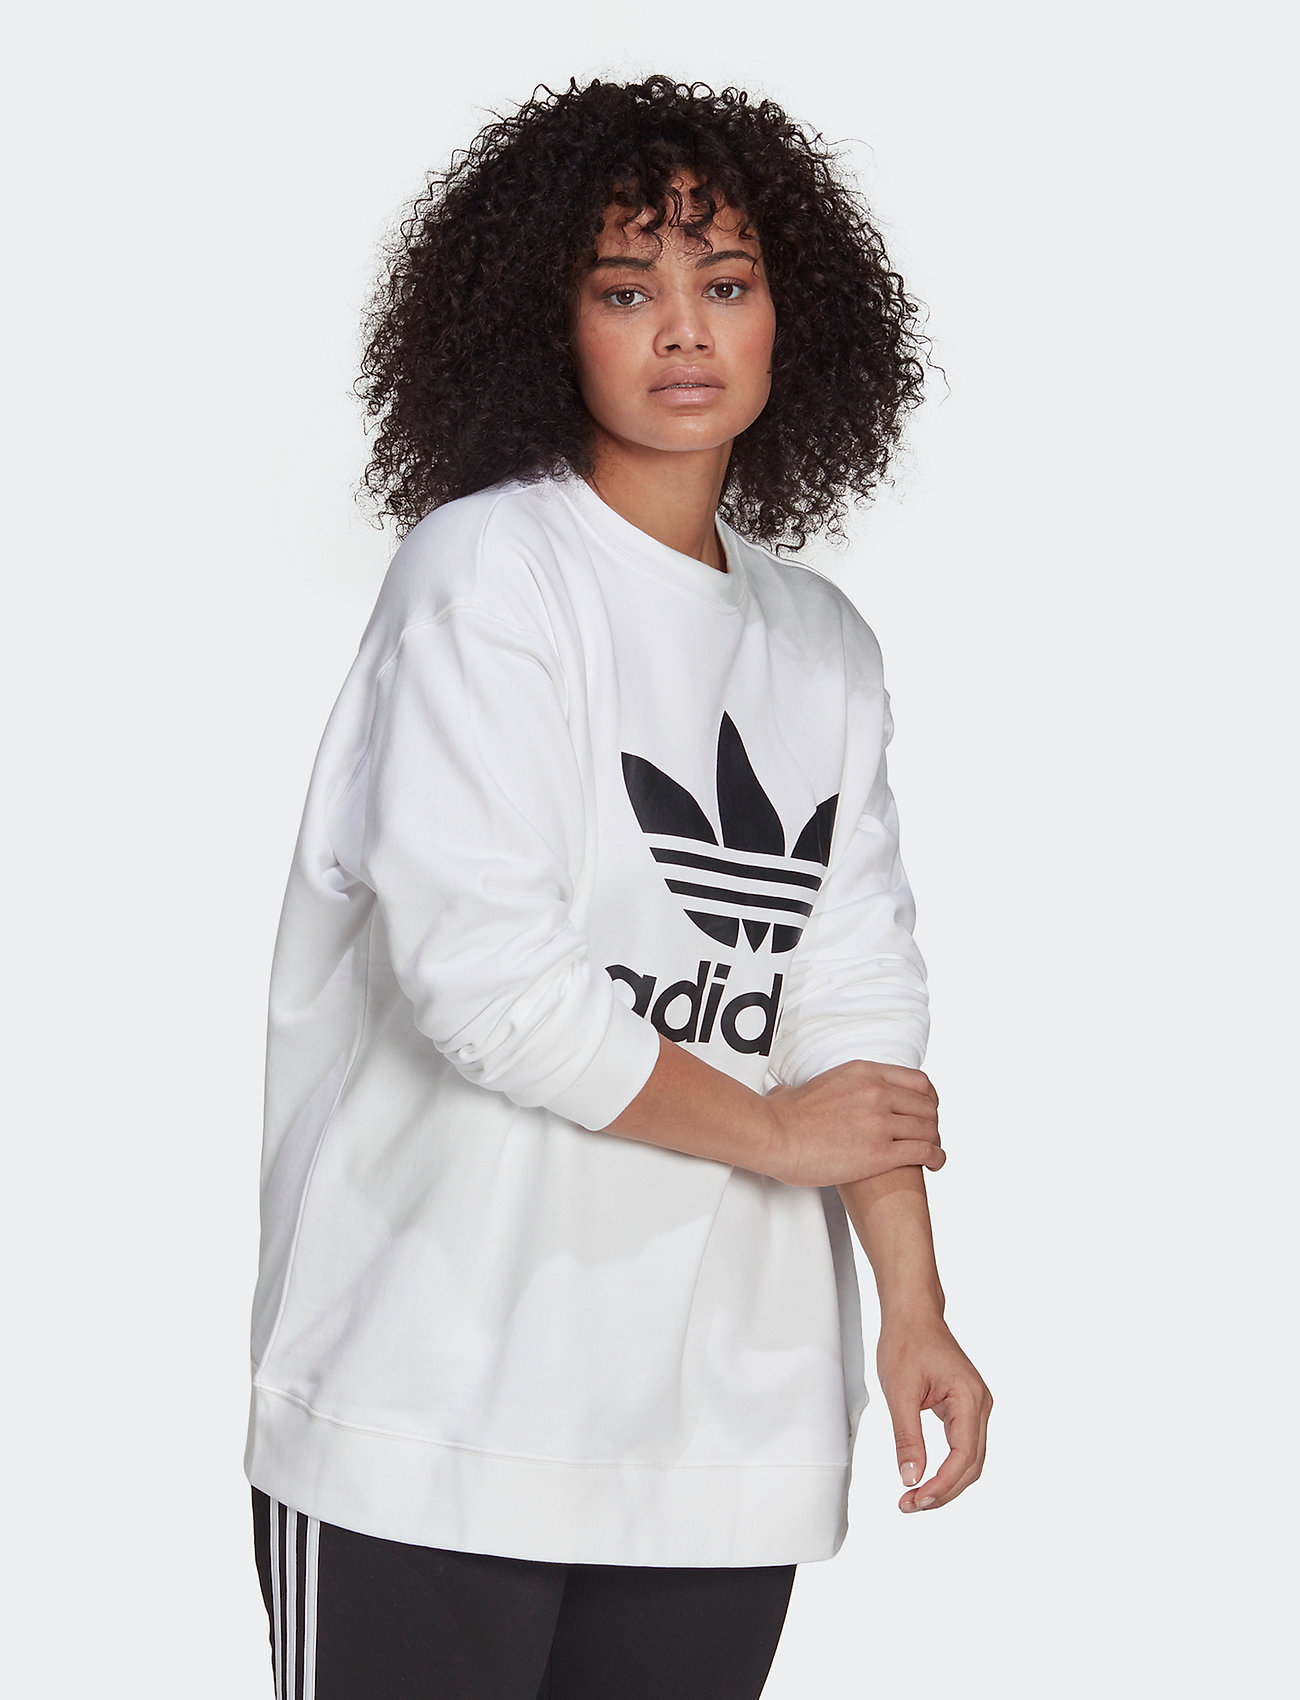 momentum venstre raid adidas Originals Trefoil Crew Sweatshirt (plus Size) - Sweatshirts |  Boozt.com